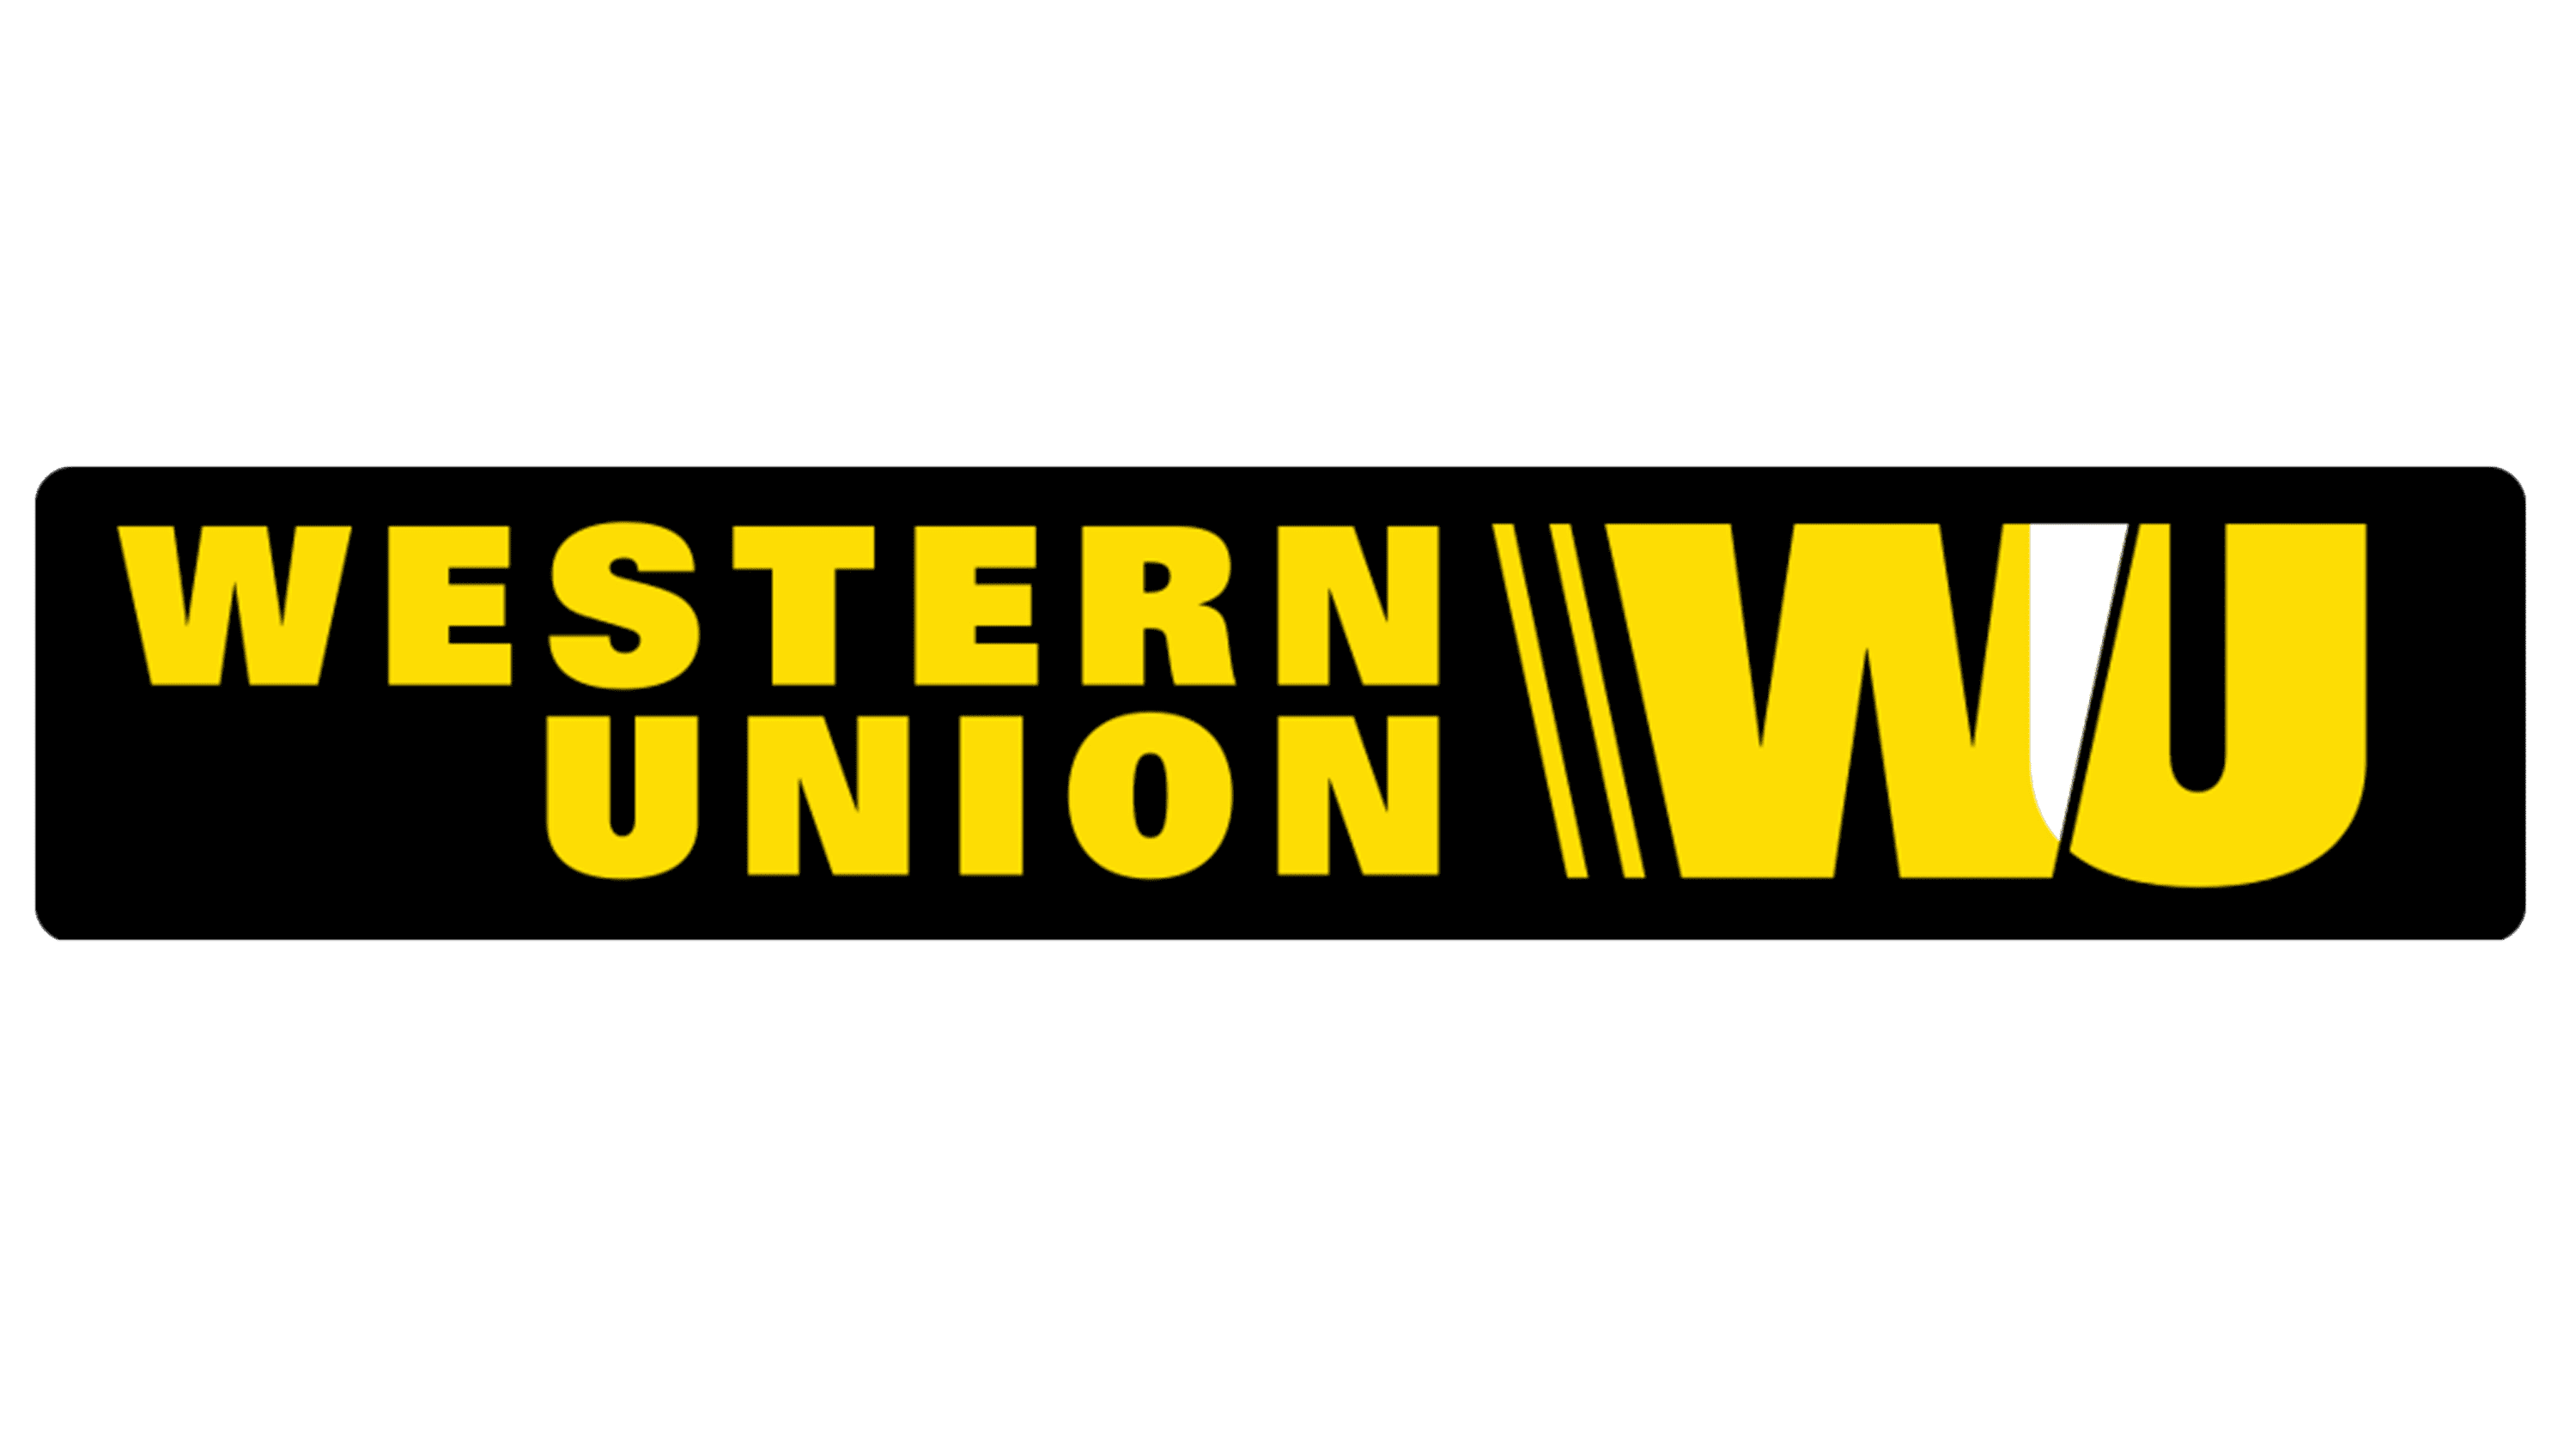 western union money order logo